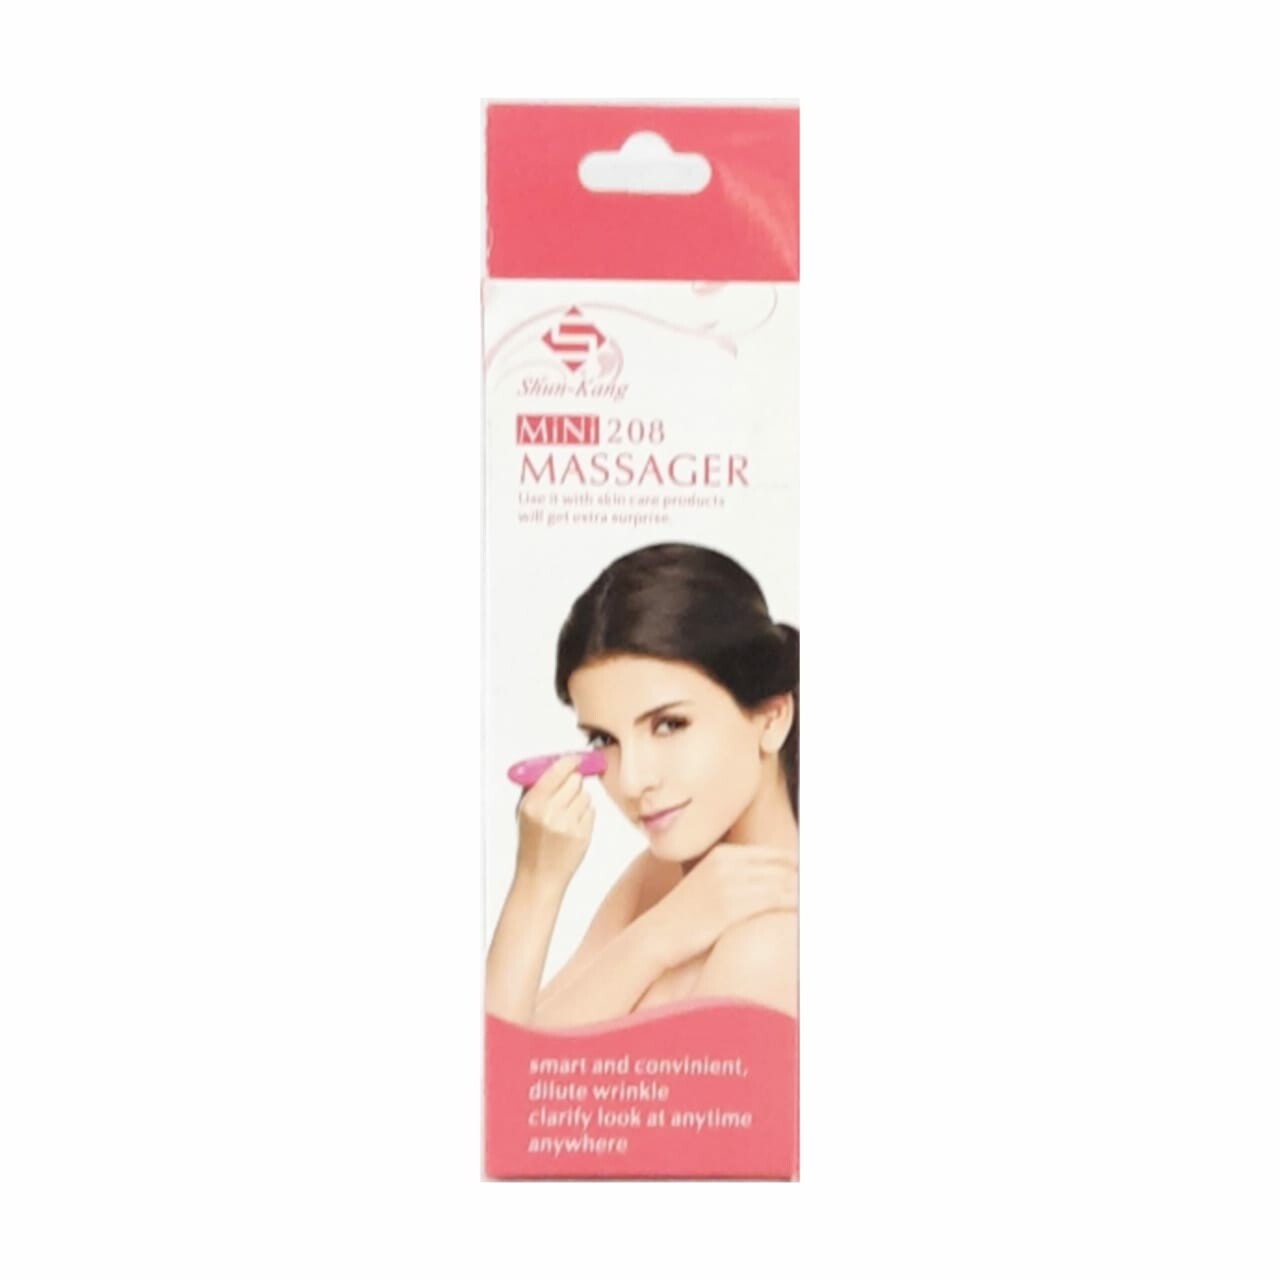 Mini 208 Massager Face massager/Wrinkles Removal/Facial Massager